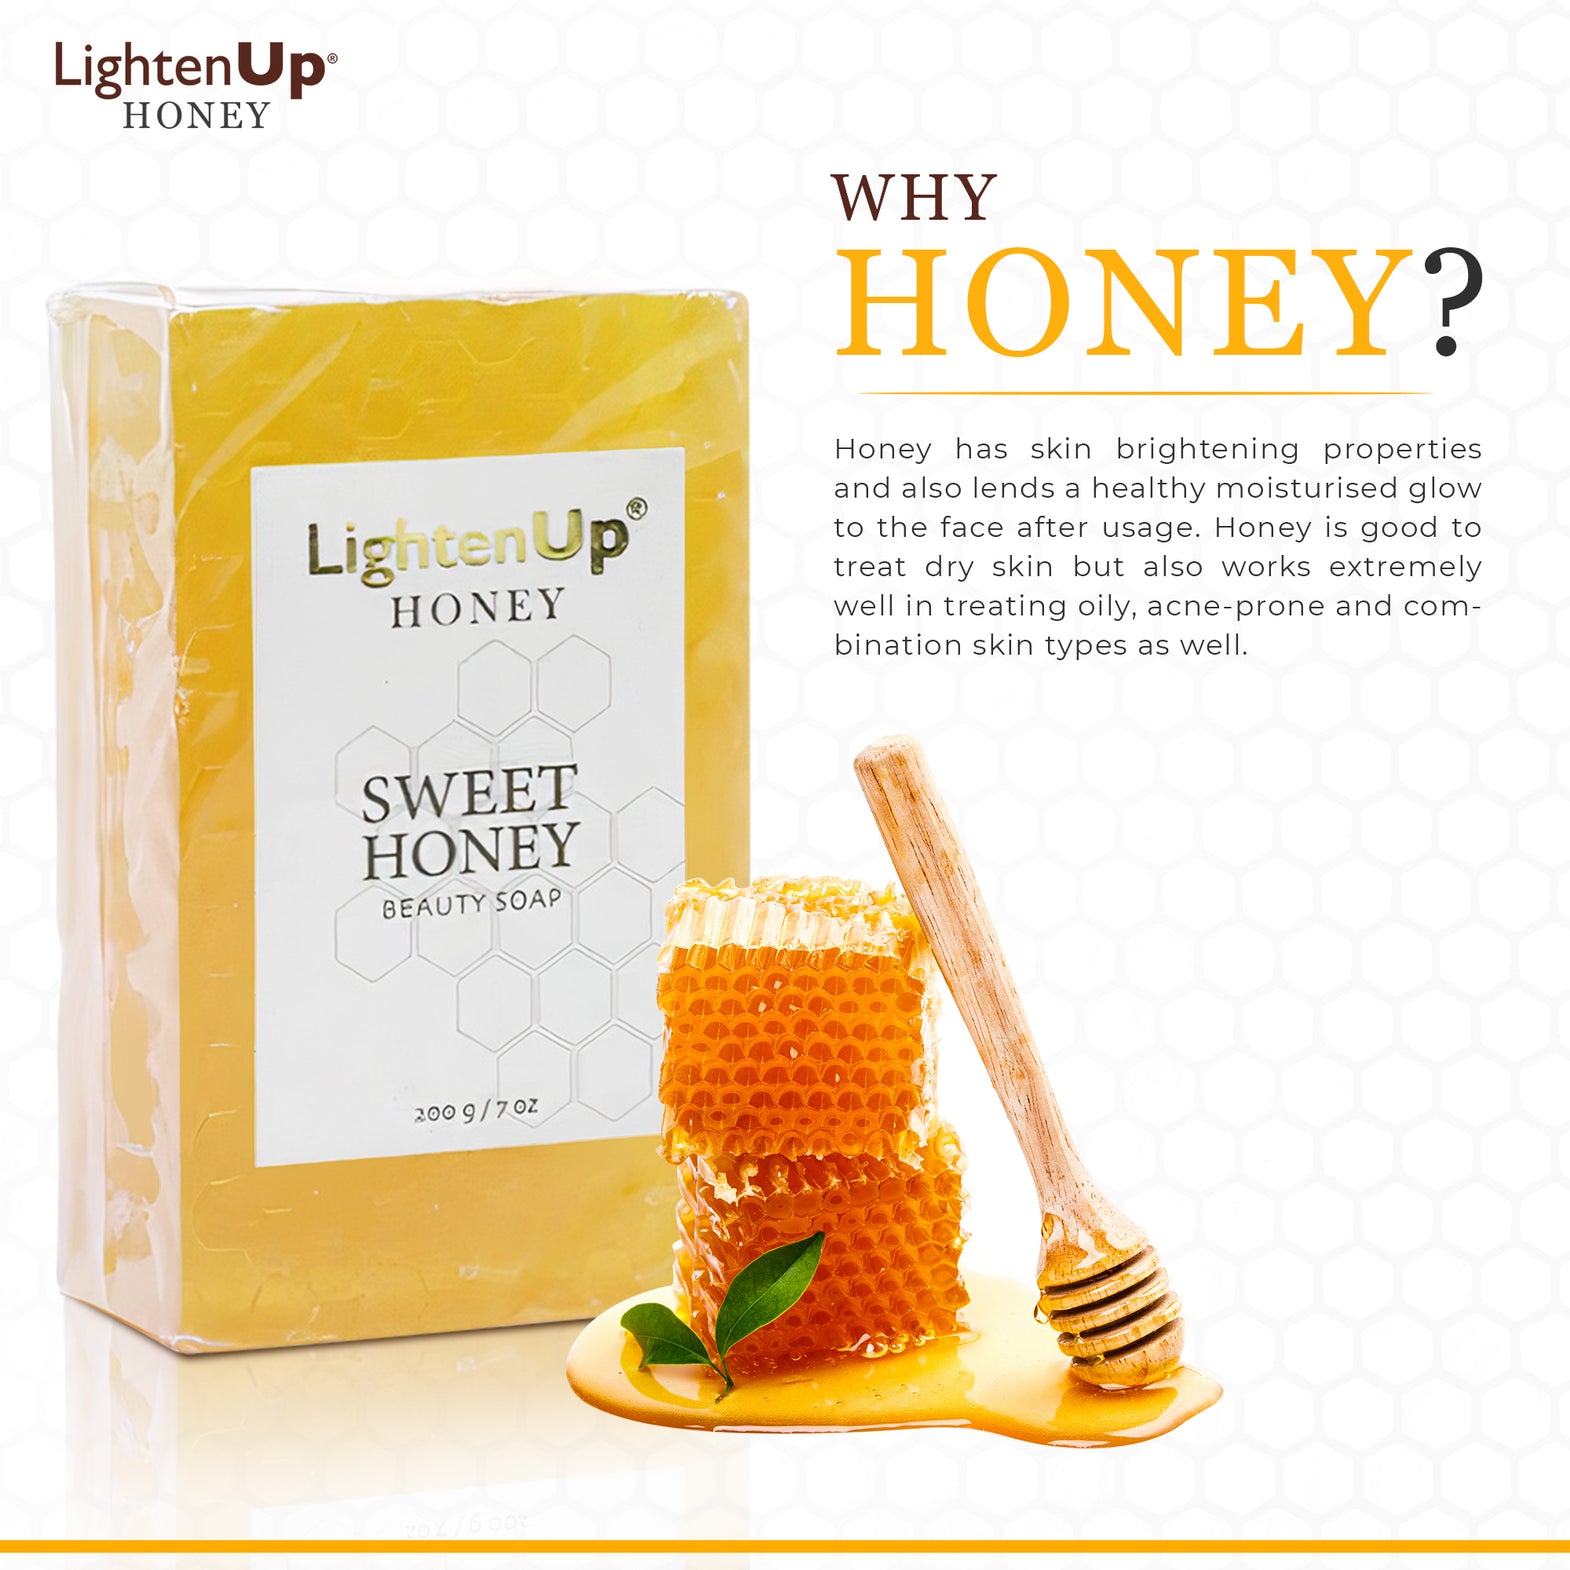 LightenUp Honey Beauty Soap 200g